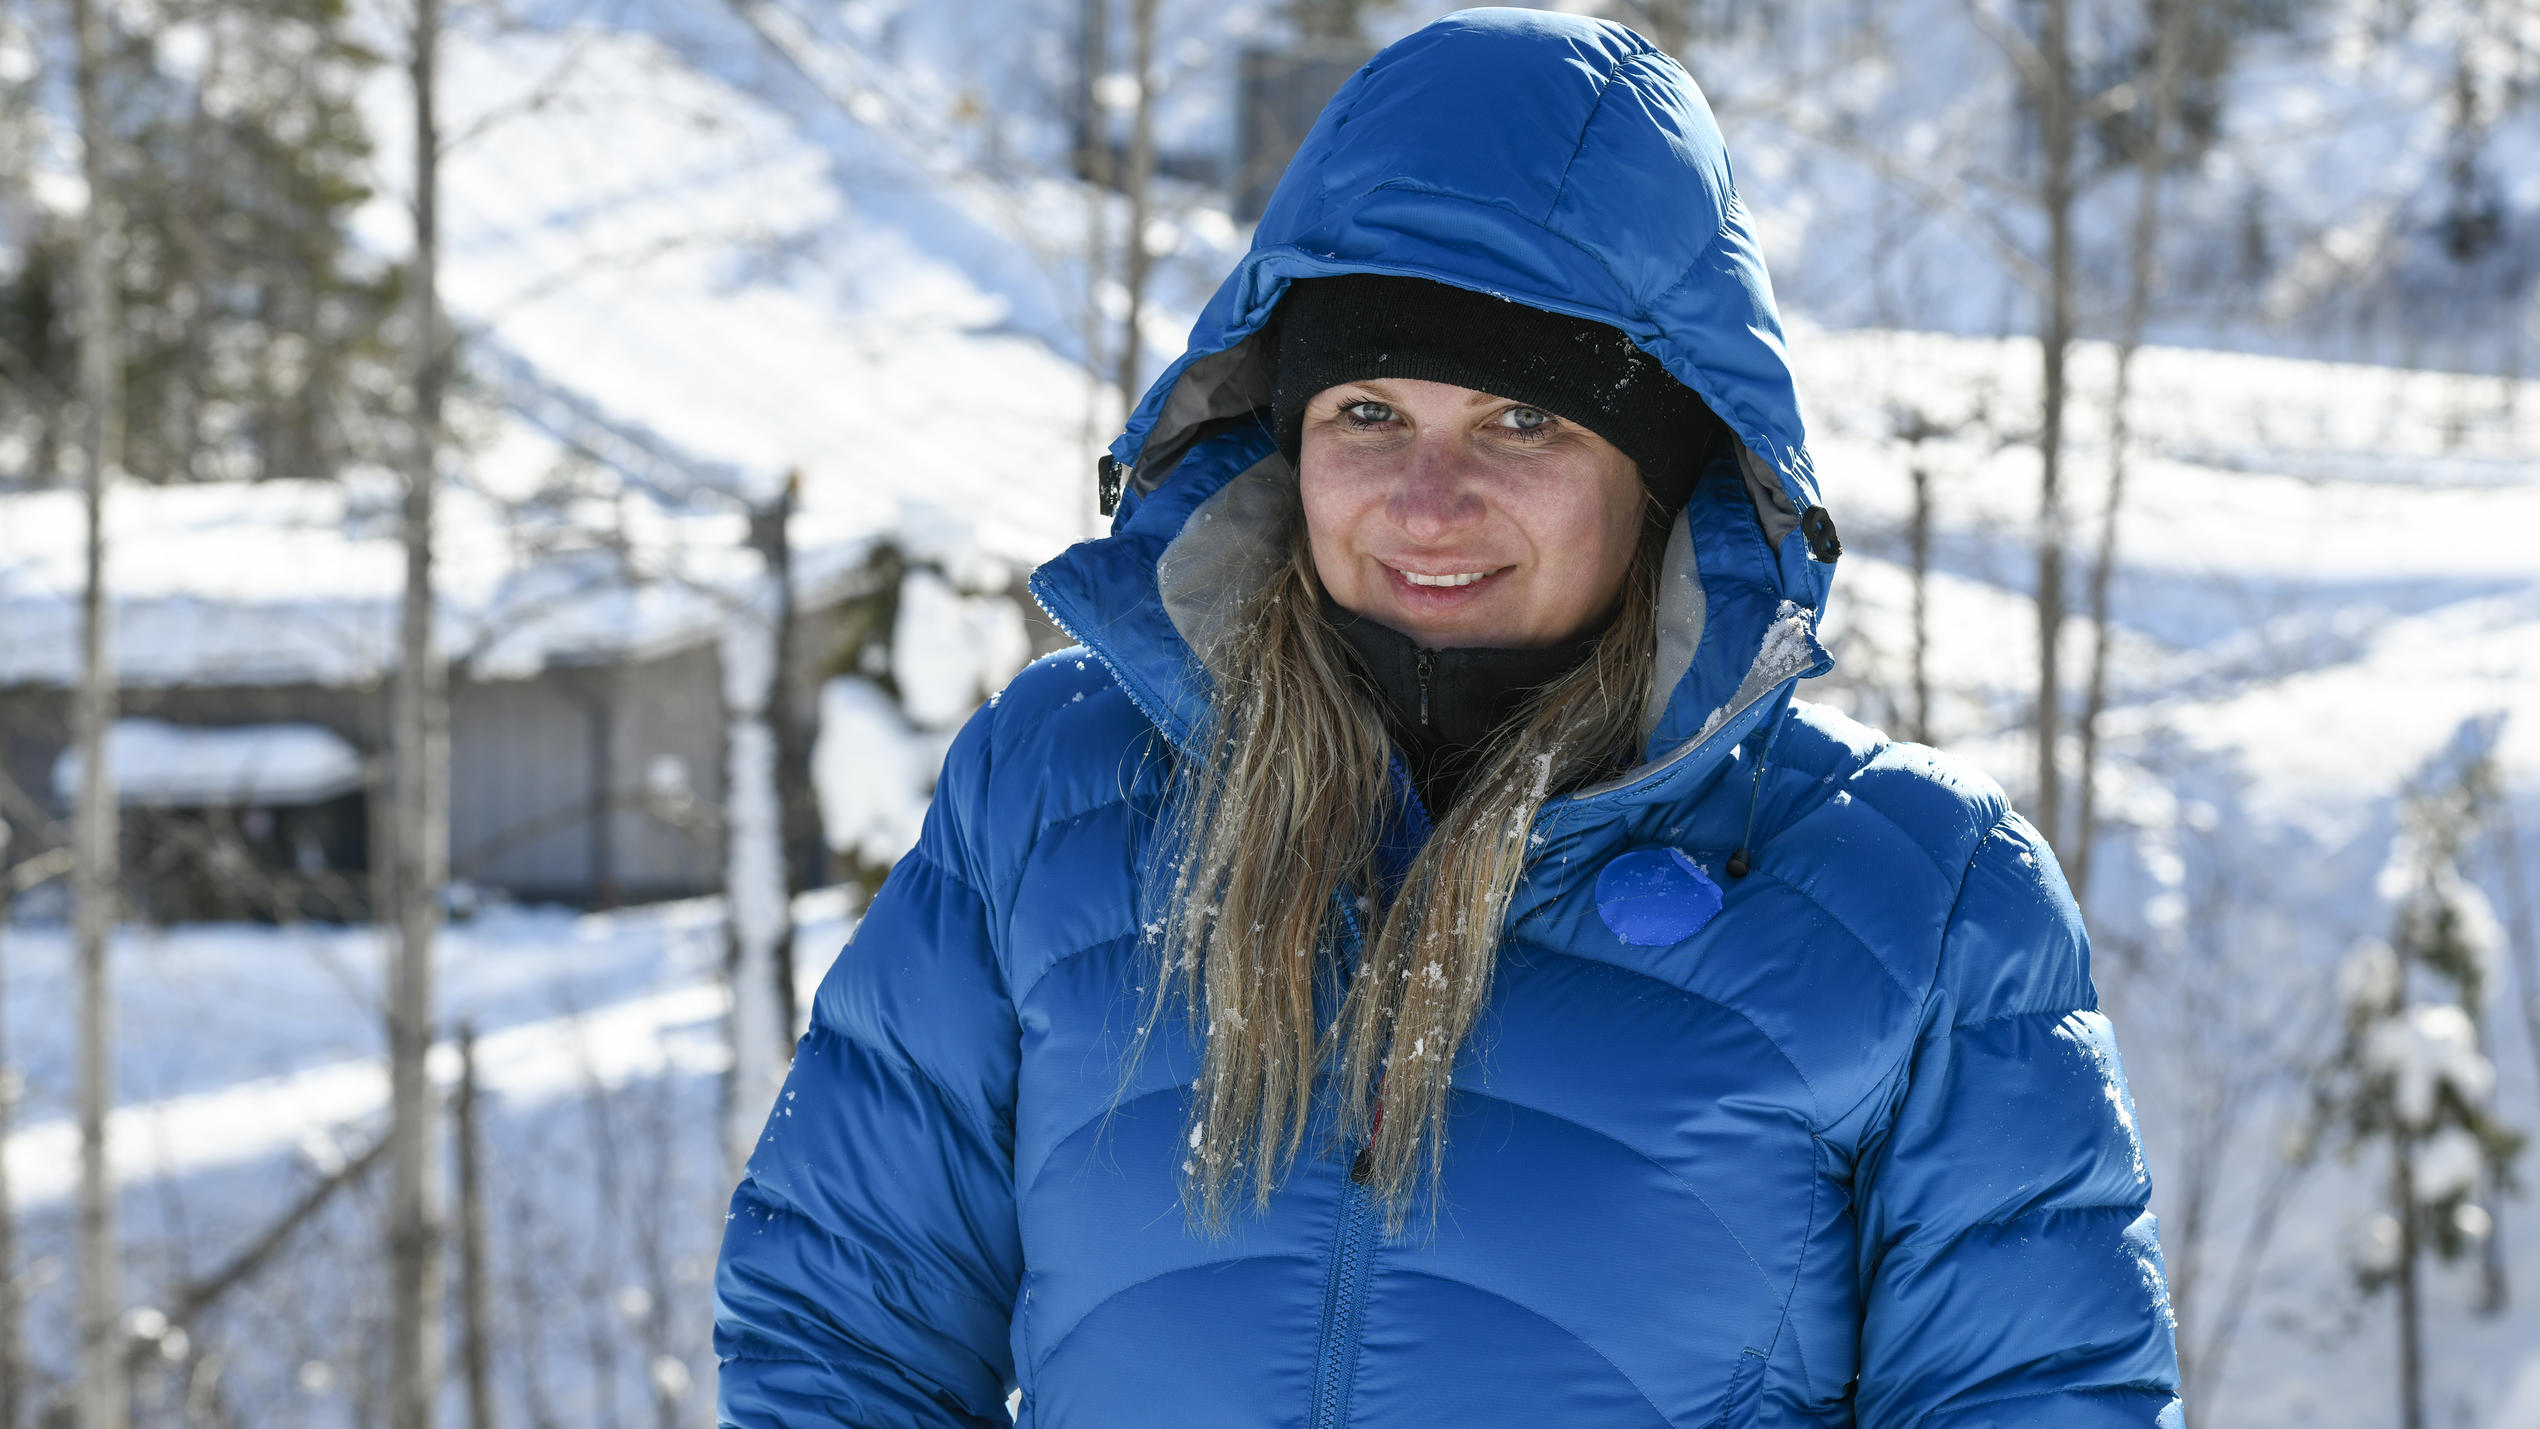 Magdalena Brzeska tritt bei "Ewige Helden - Die Winterspiele" an